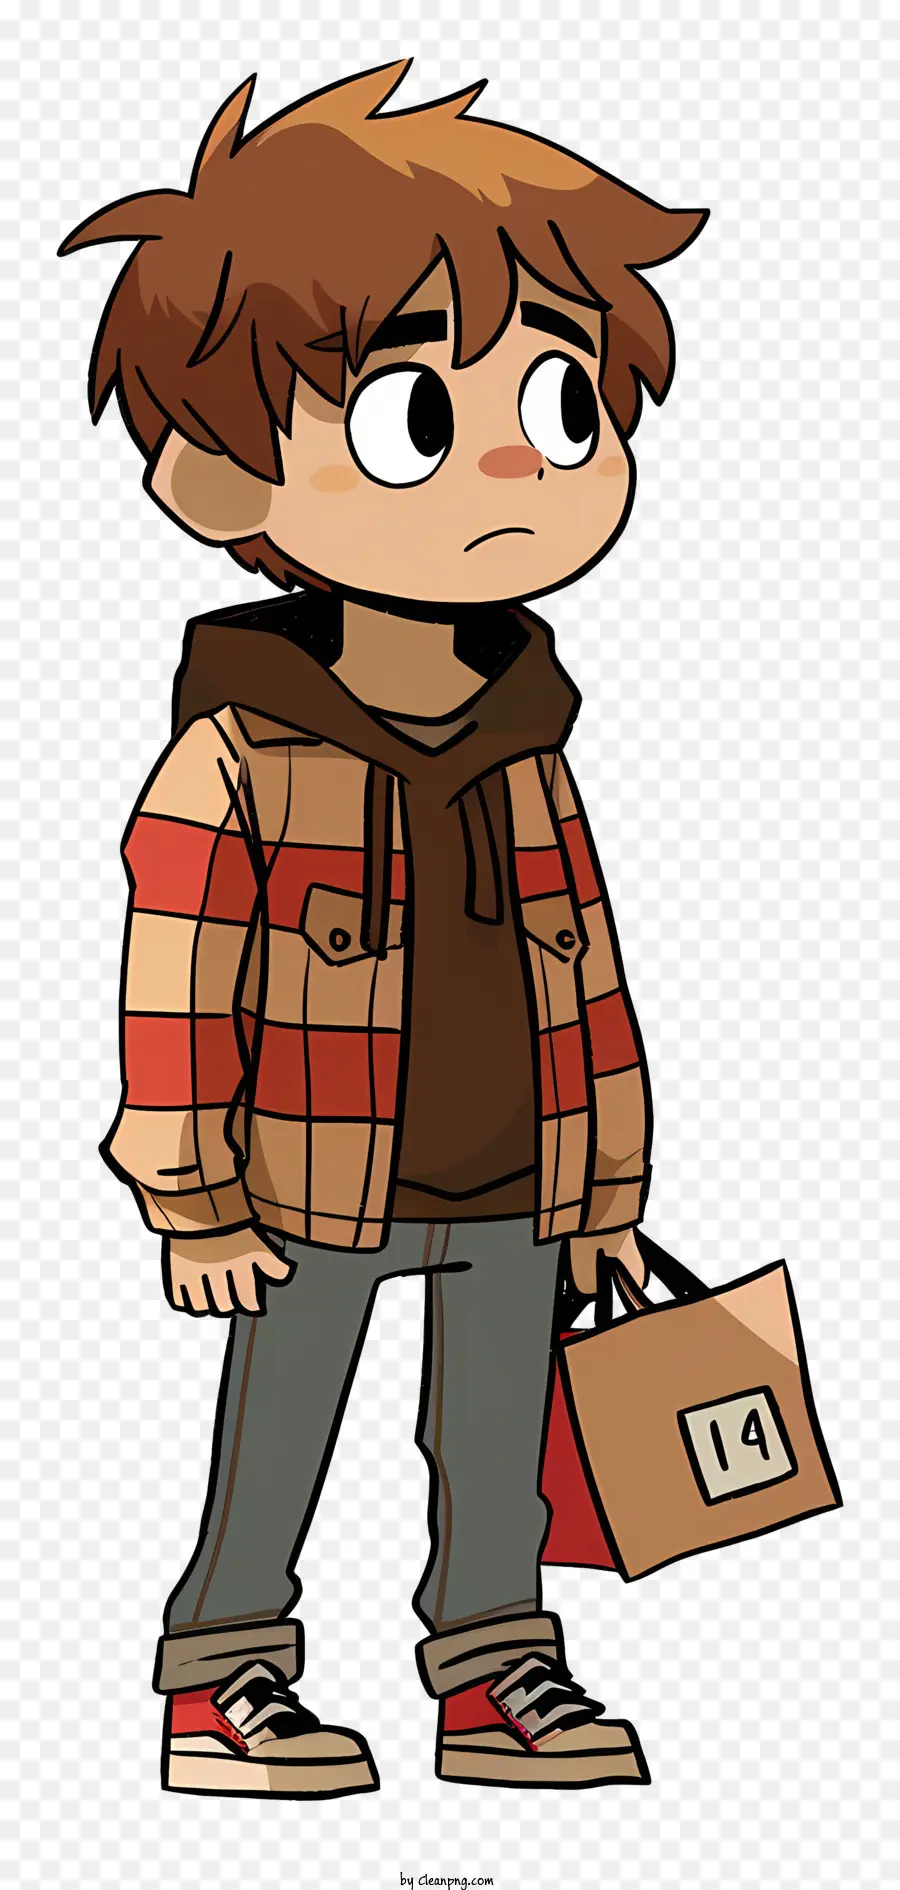 Scott Pilgrim Cartoon Boy Brown Jacket Brown Shirt Pantaloni grigi - Cartoon Boy in giacca marrone con scatole